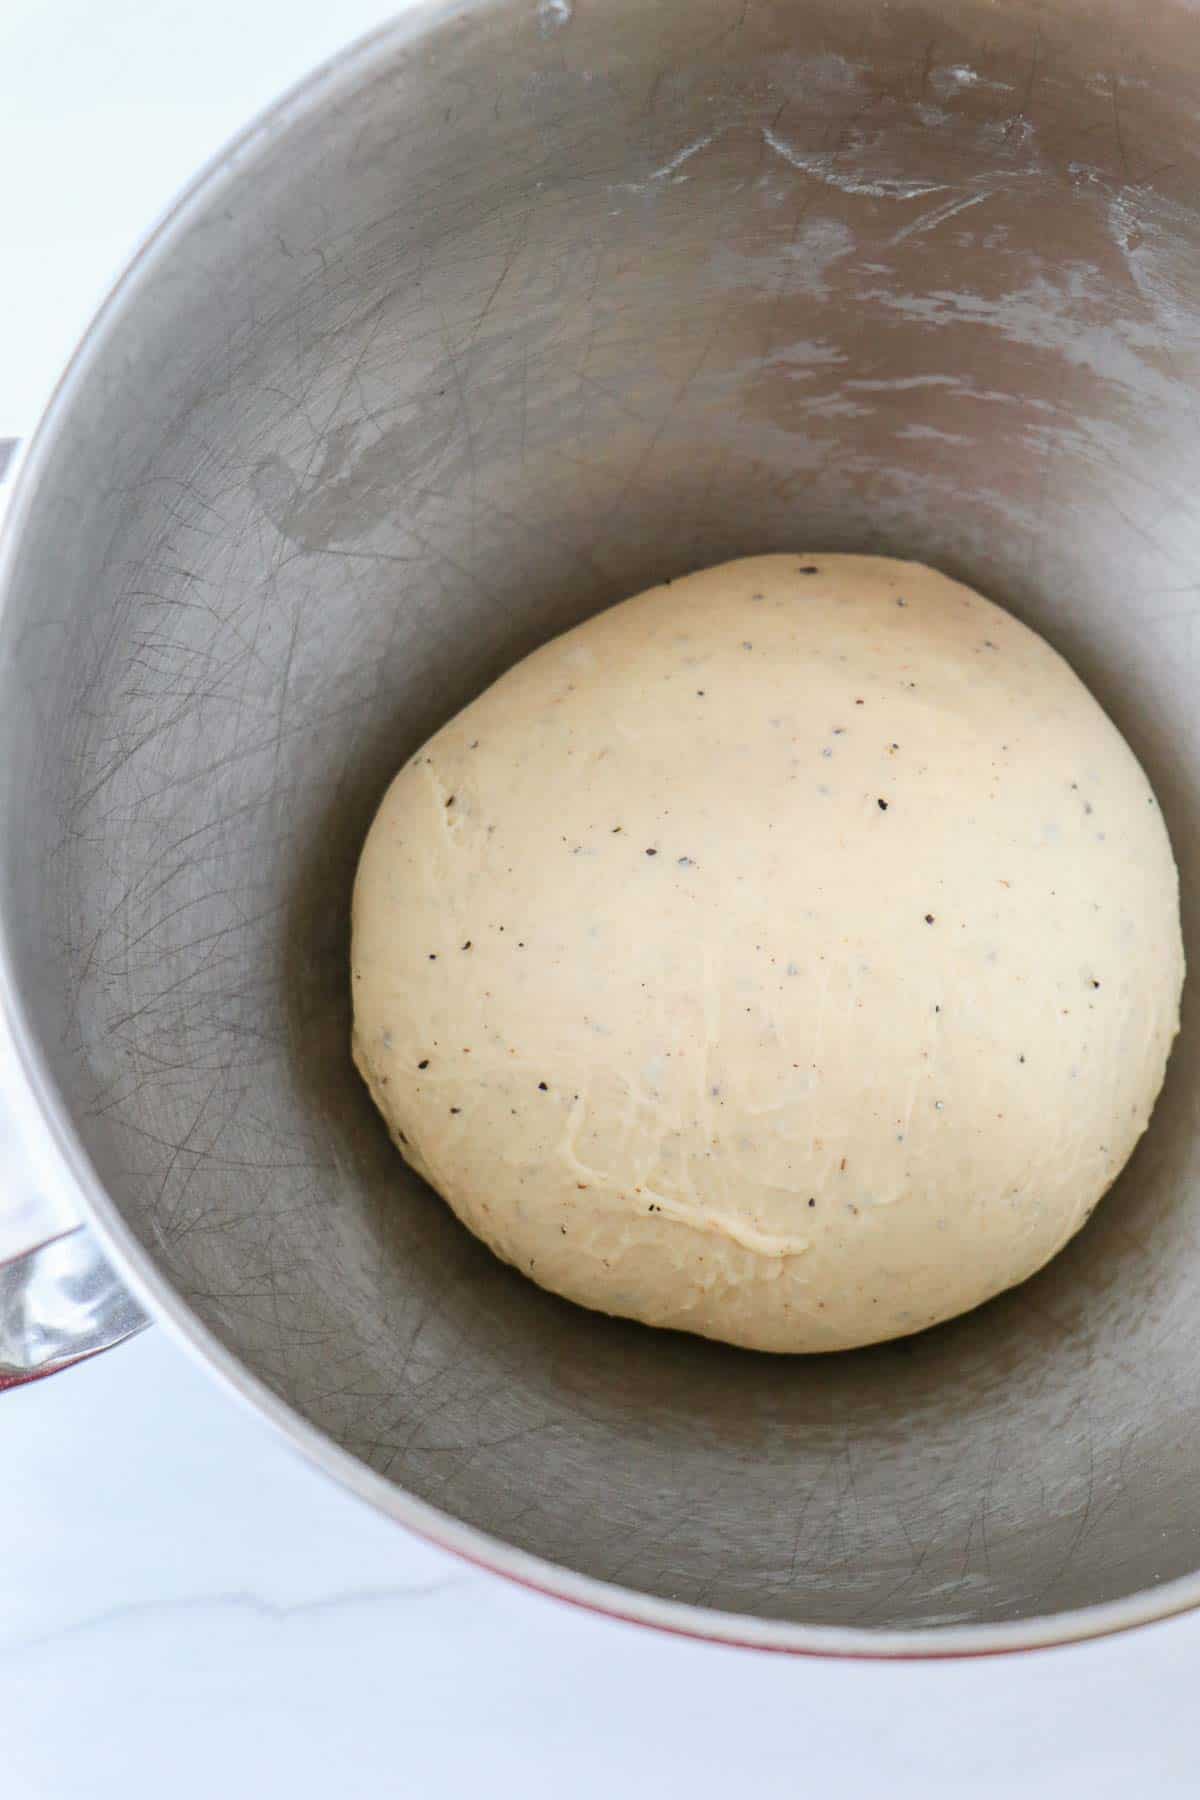 Cardamom dough in a metal bowl.